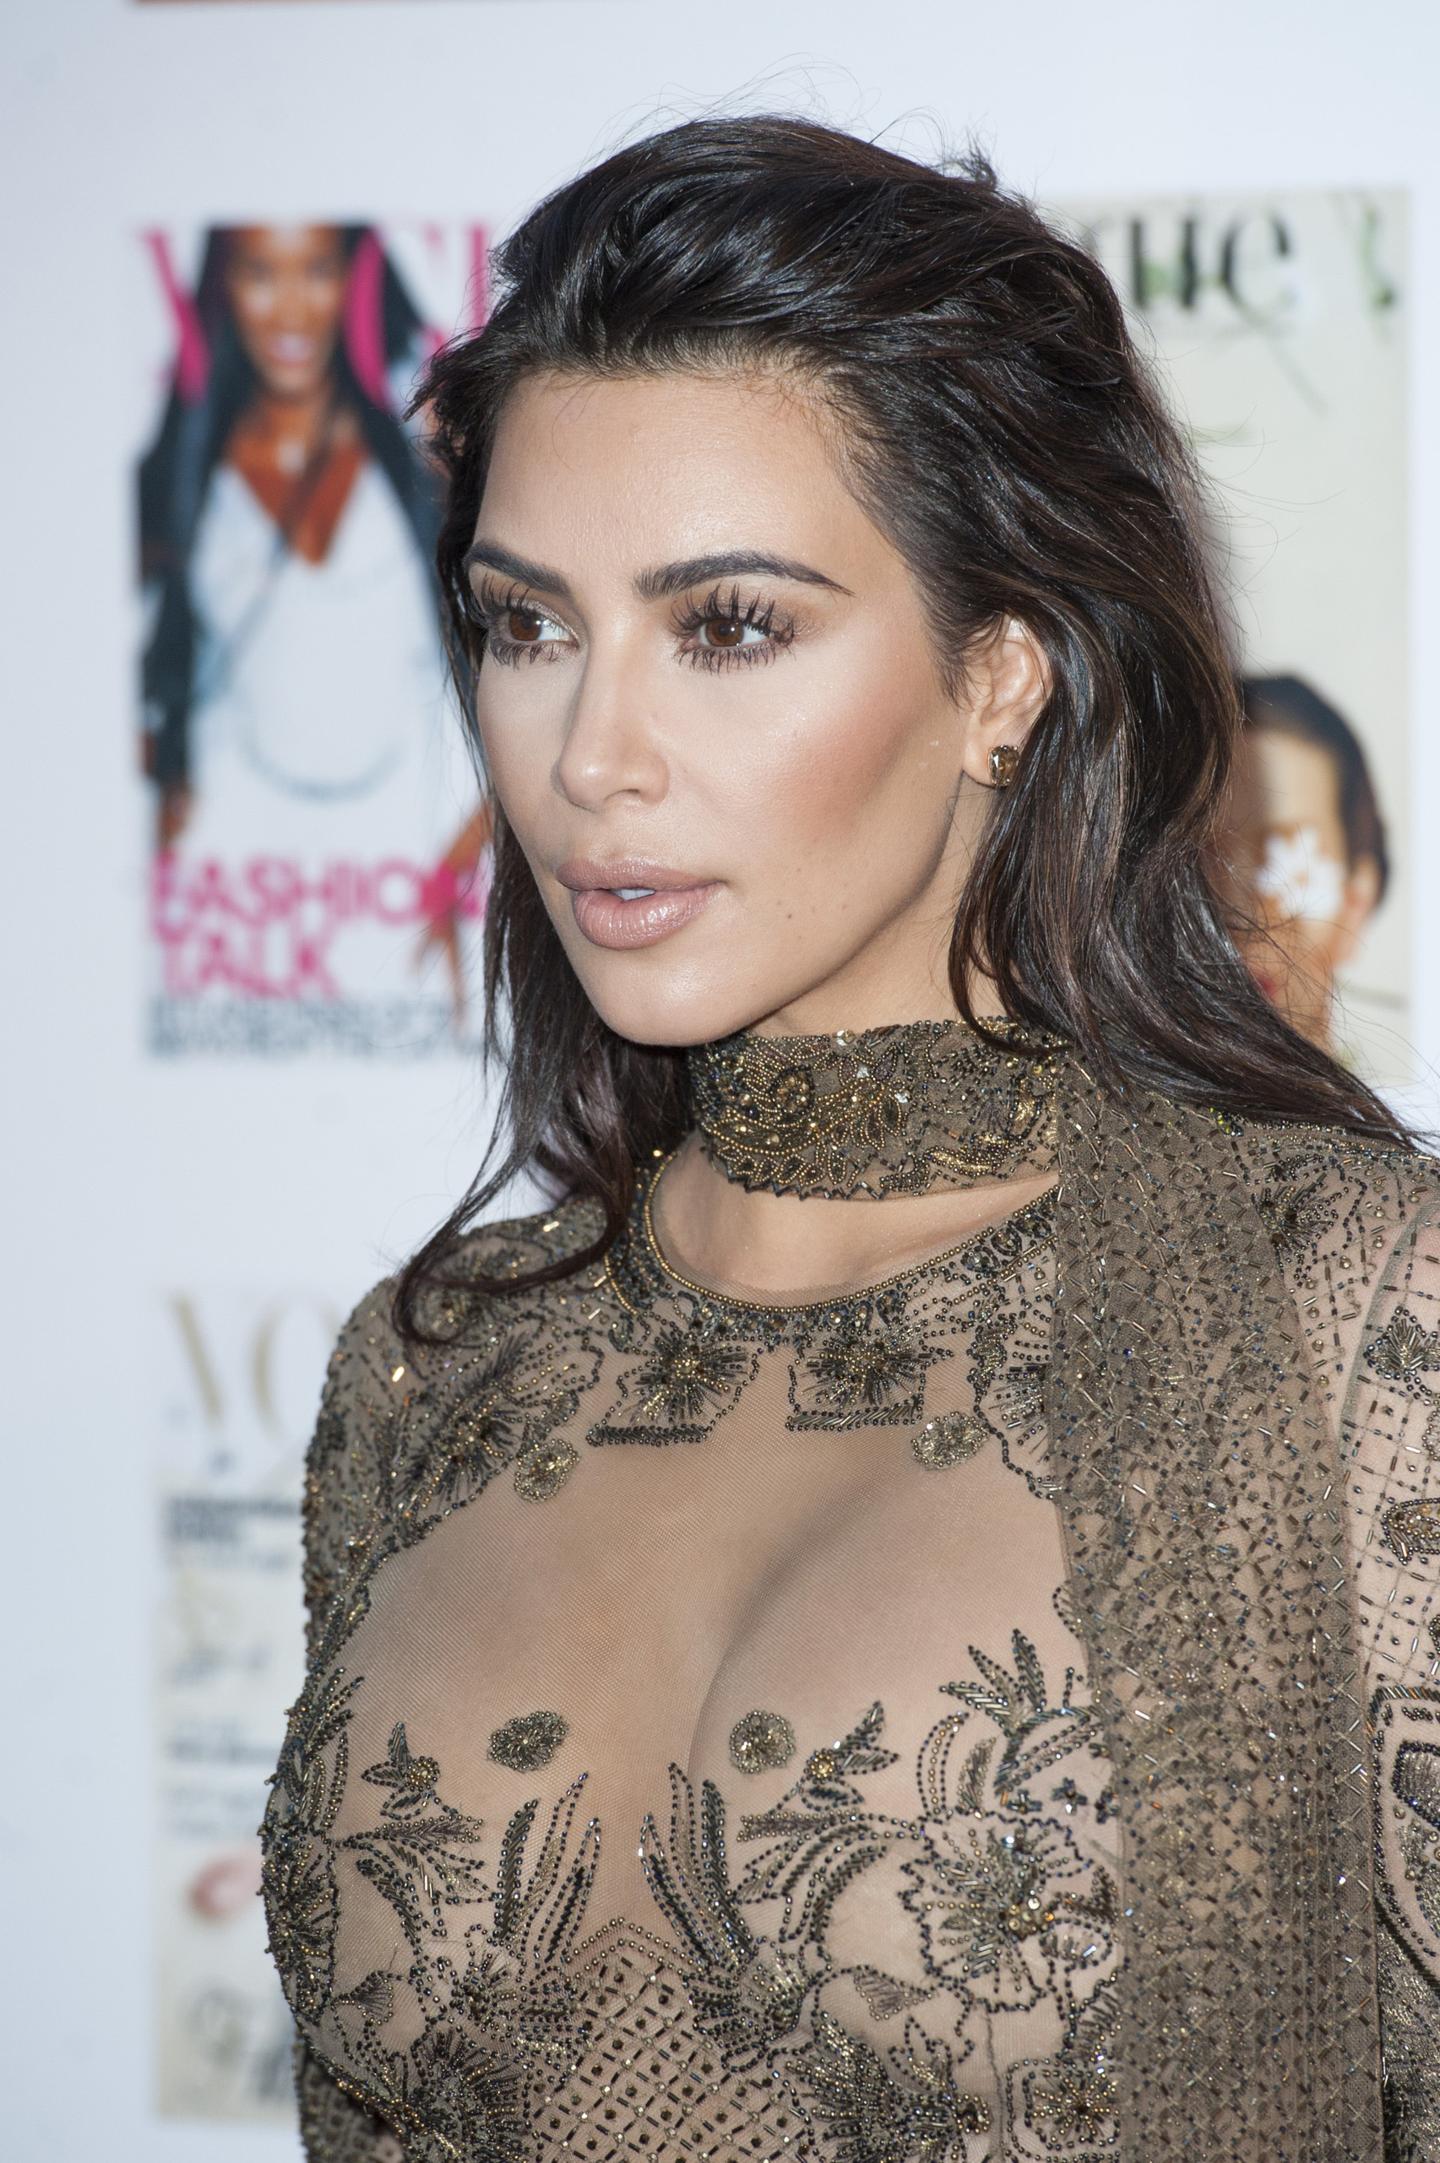 Kim Kardashian got cut from 'The Hills